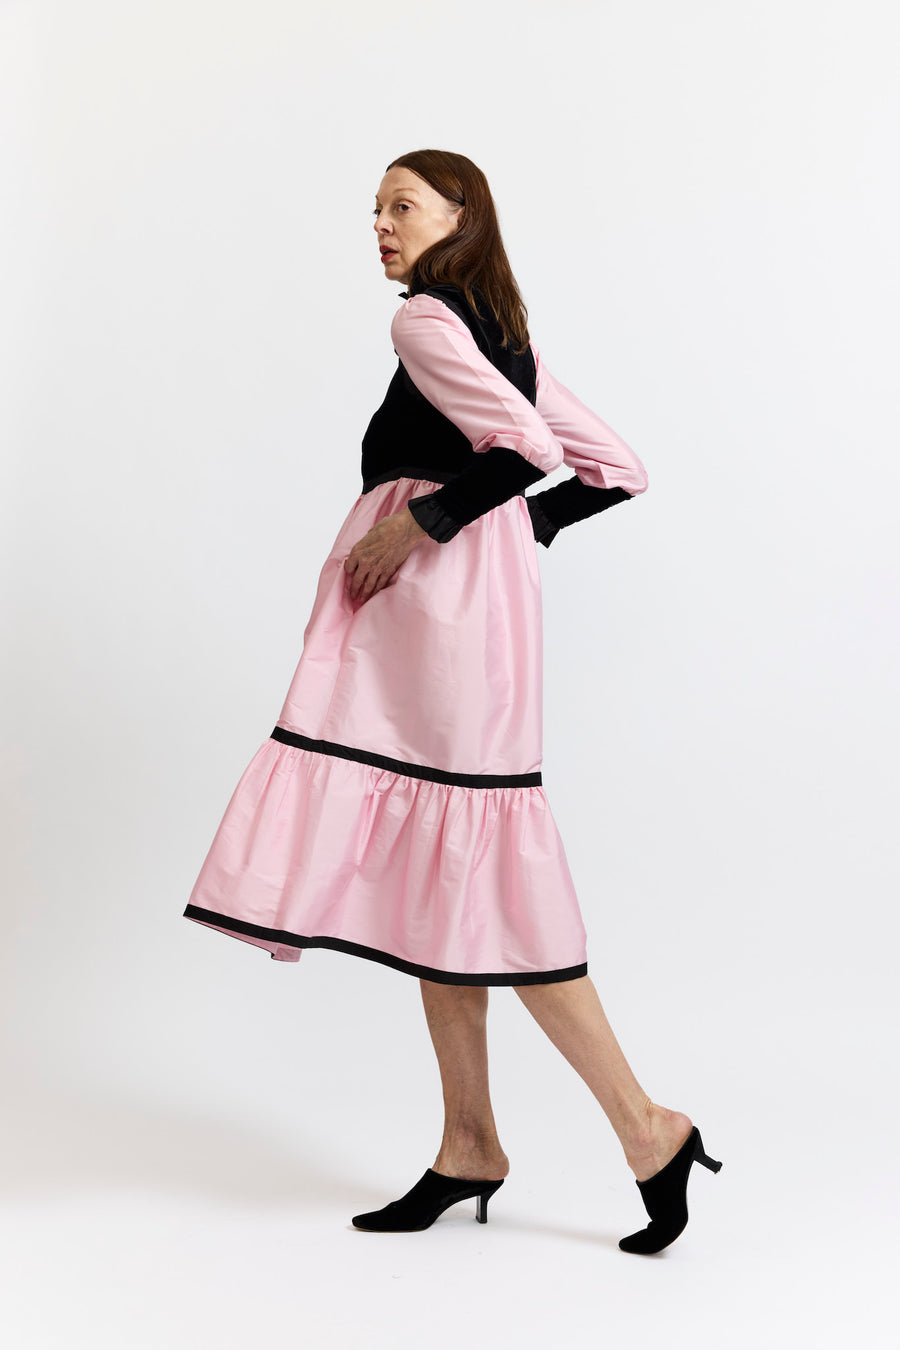 BATSHEVA - Kavita Dress in Pink Taffeta